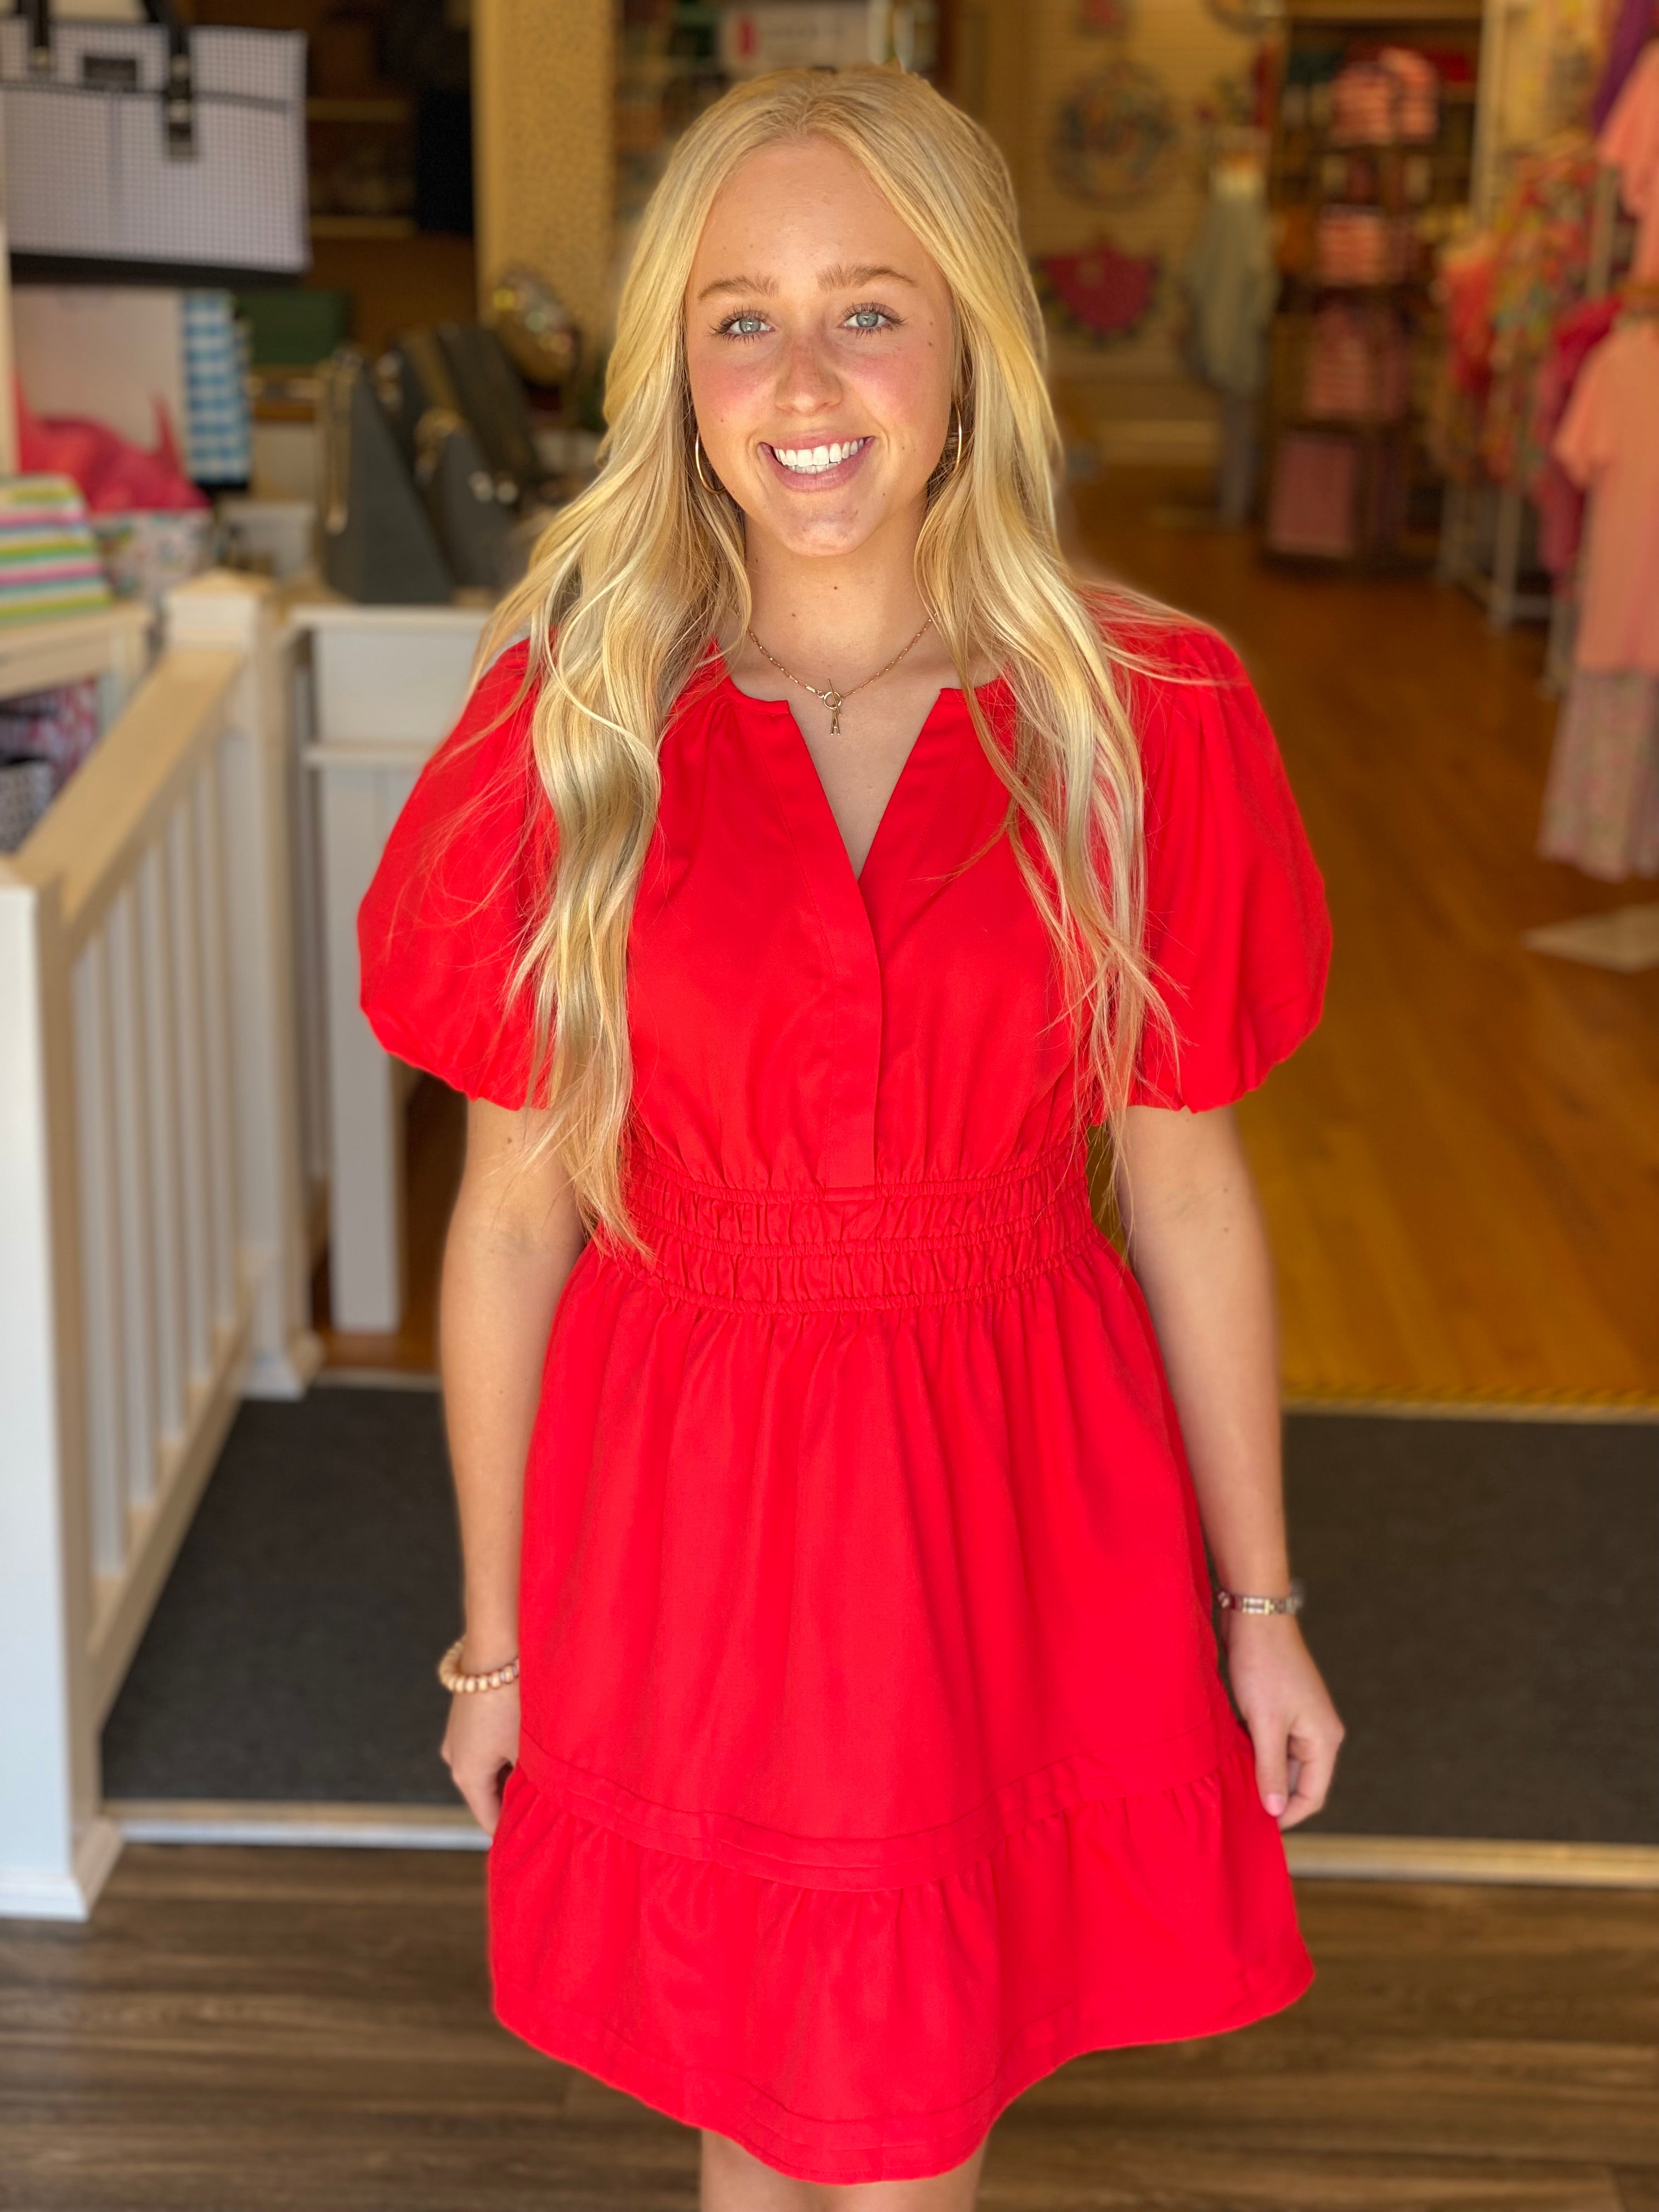 Red Knee Length Dress